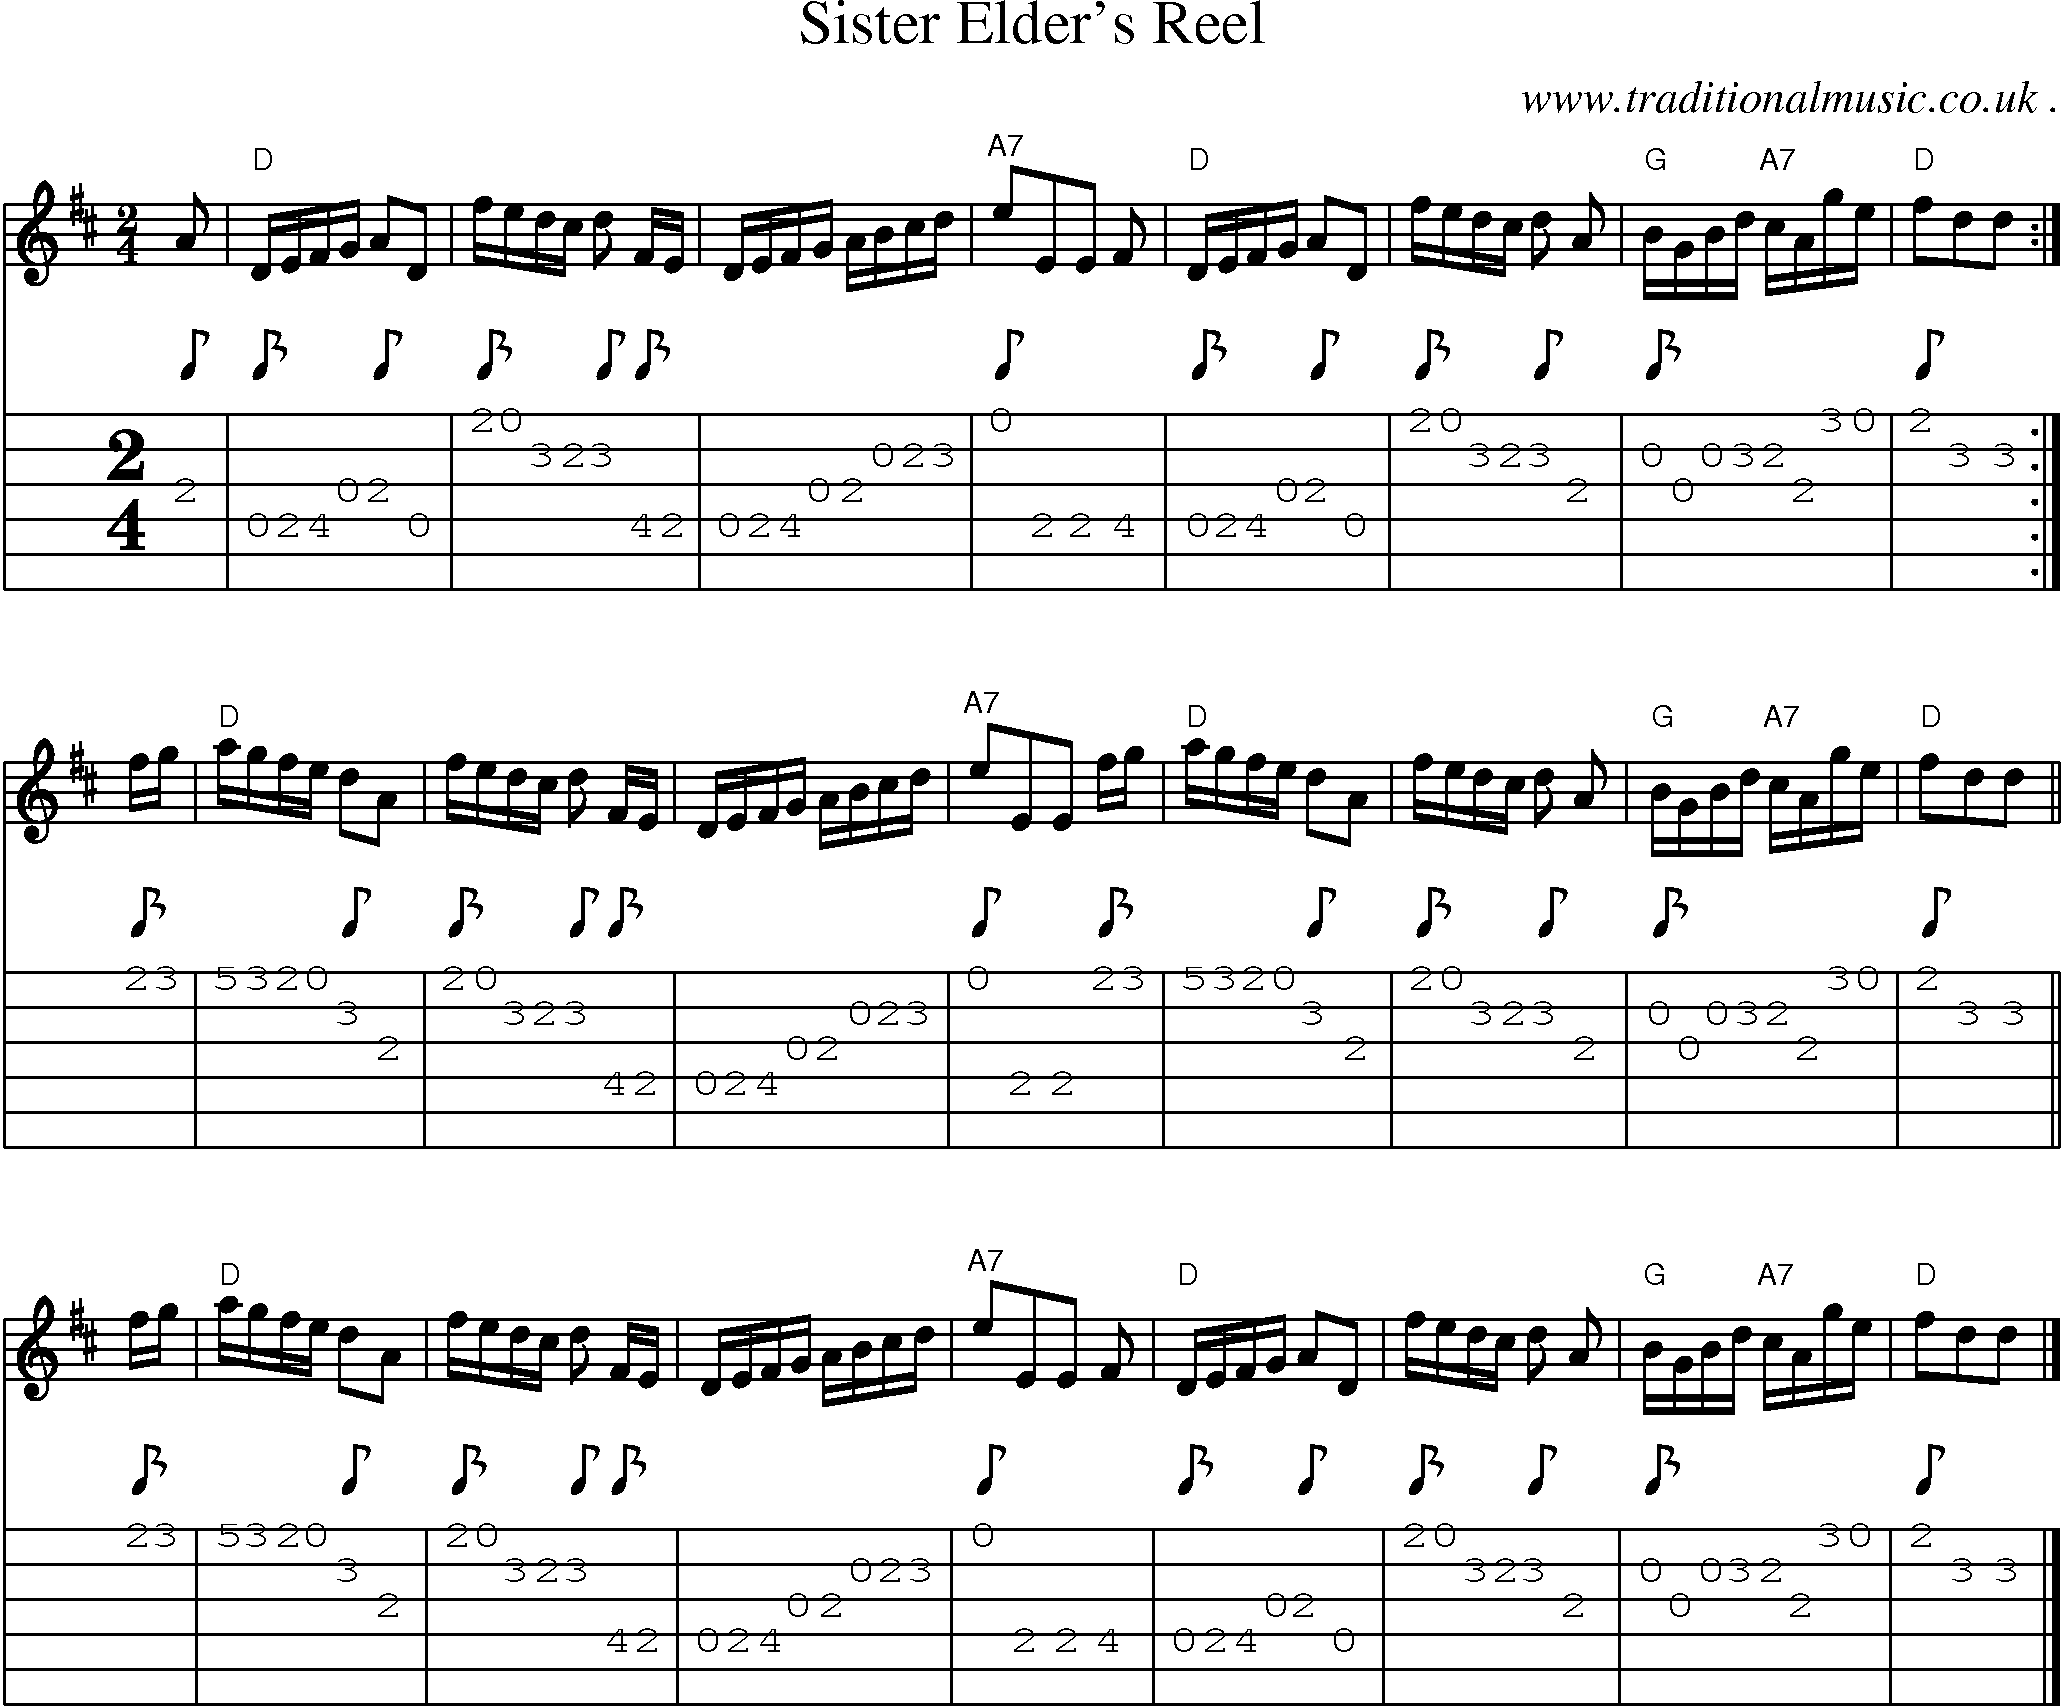 Sheet-music  score, Chords and Guitar Tabs for Sister Elders Reel